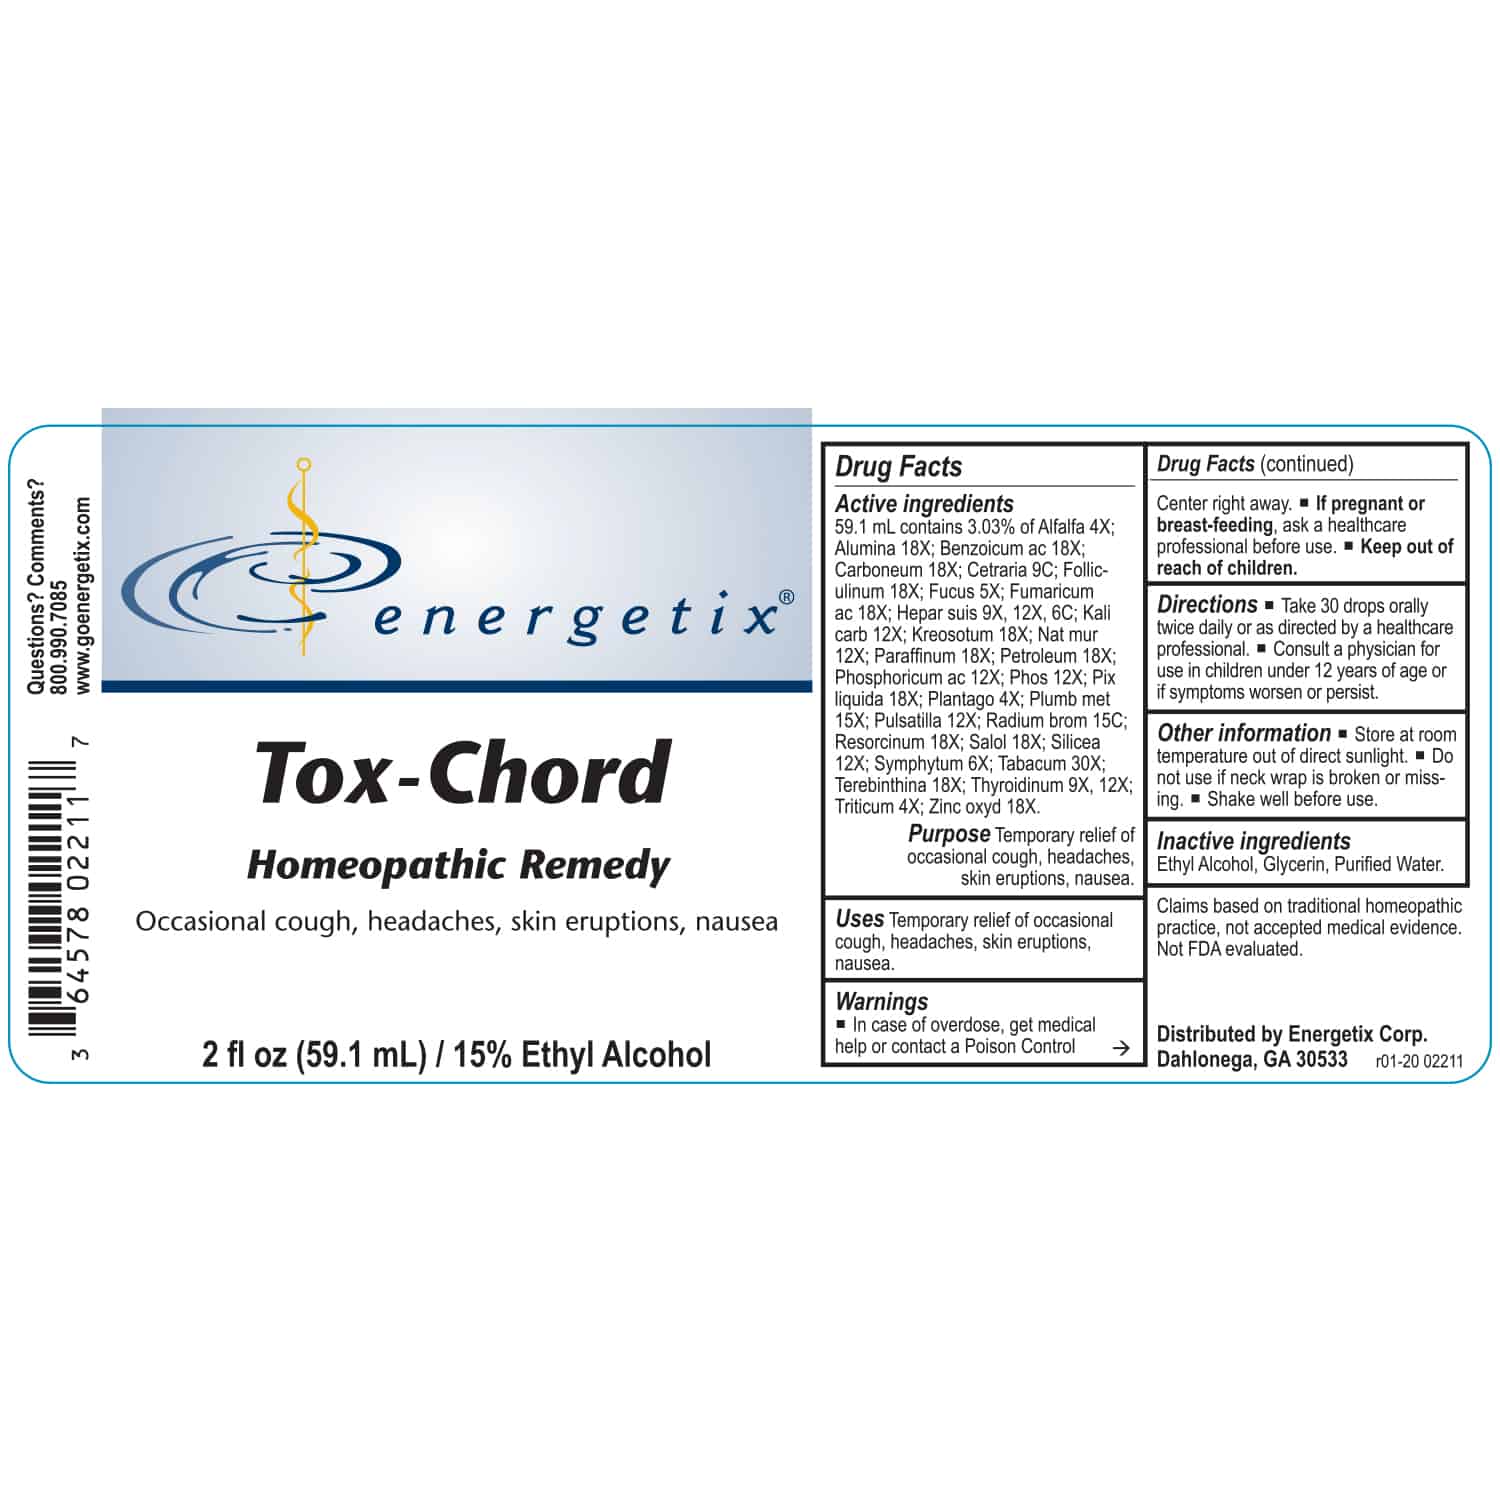 Tox-Chord